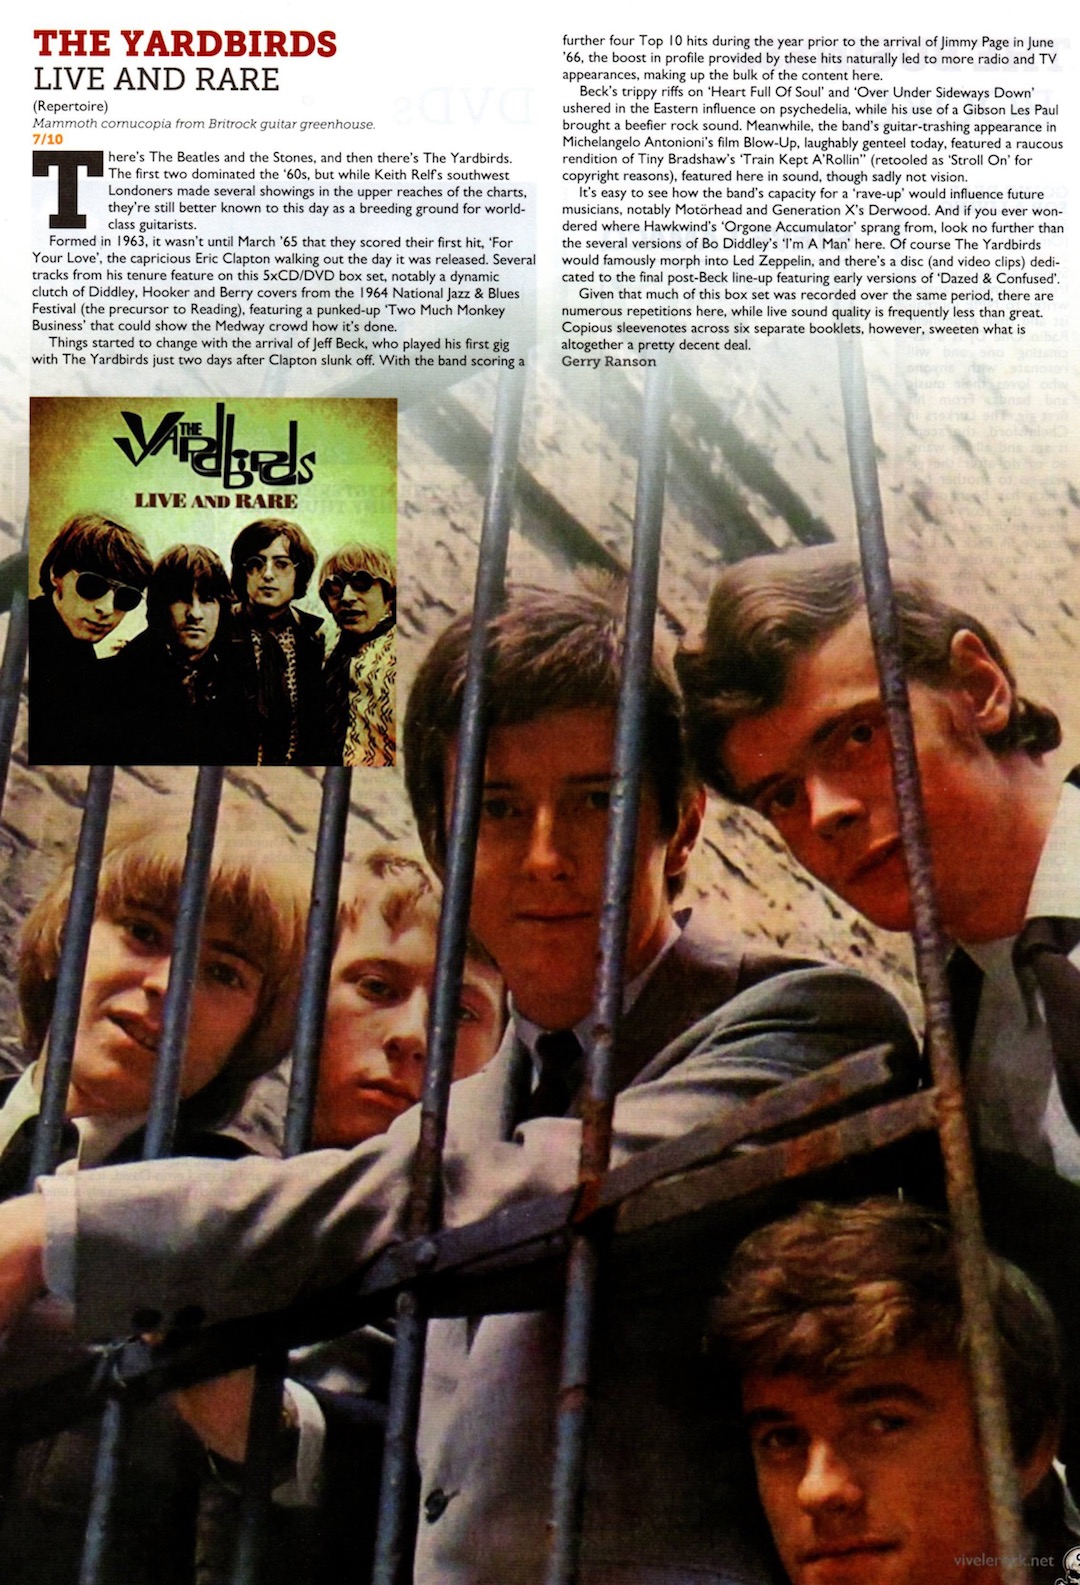 Vive Le Rock Magazine Reviews The Yardbirds - Live and Rare Repertoire Records